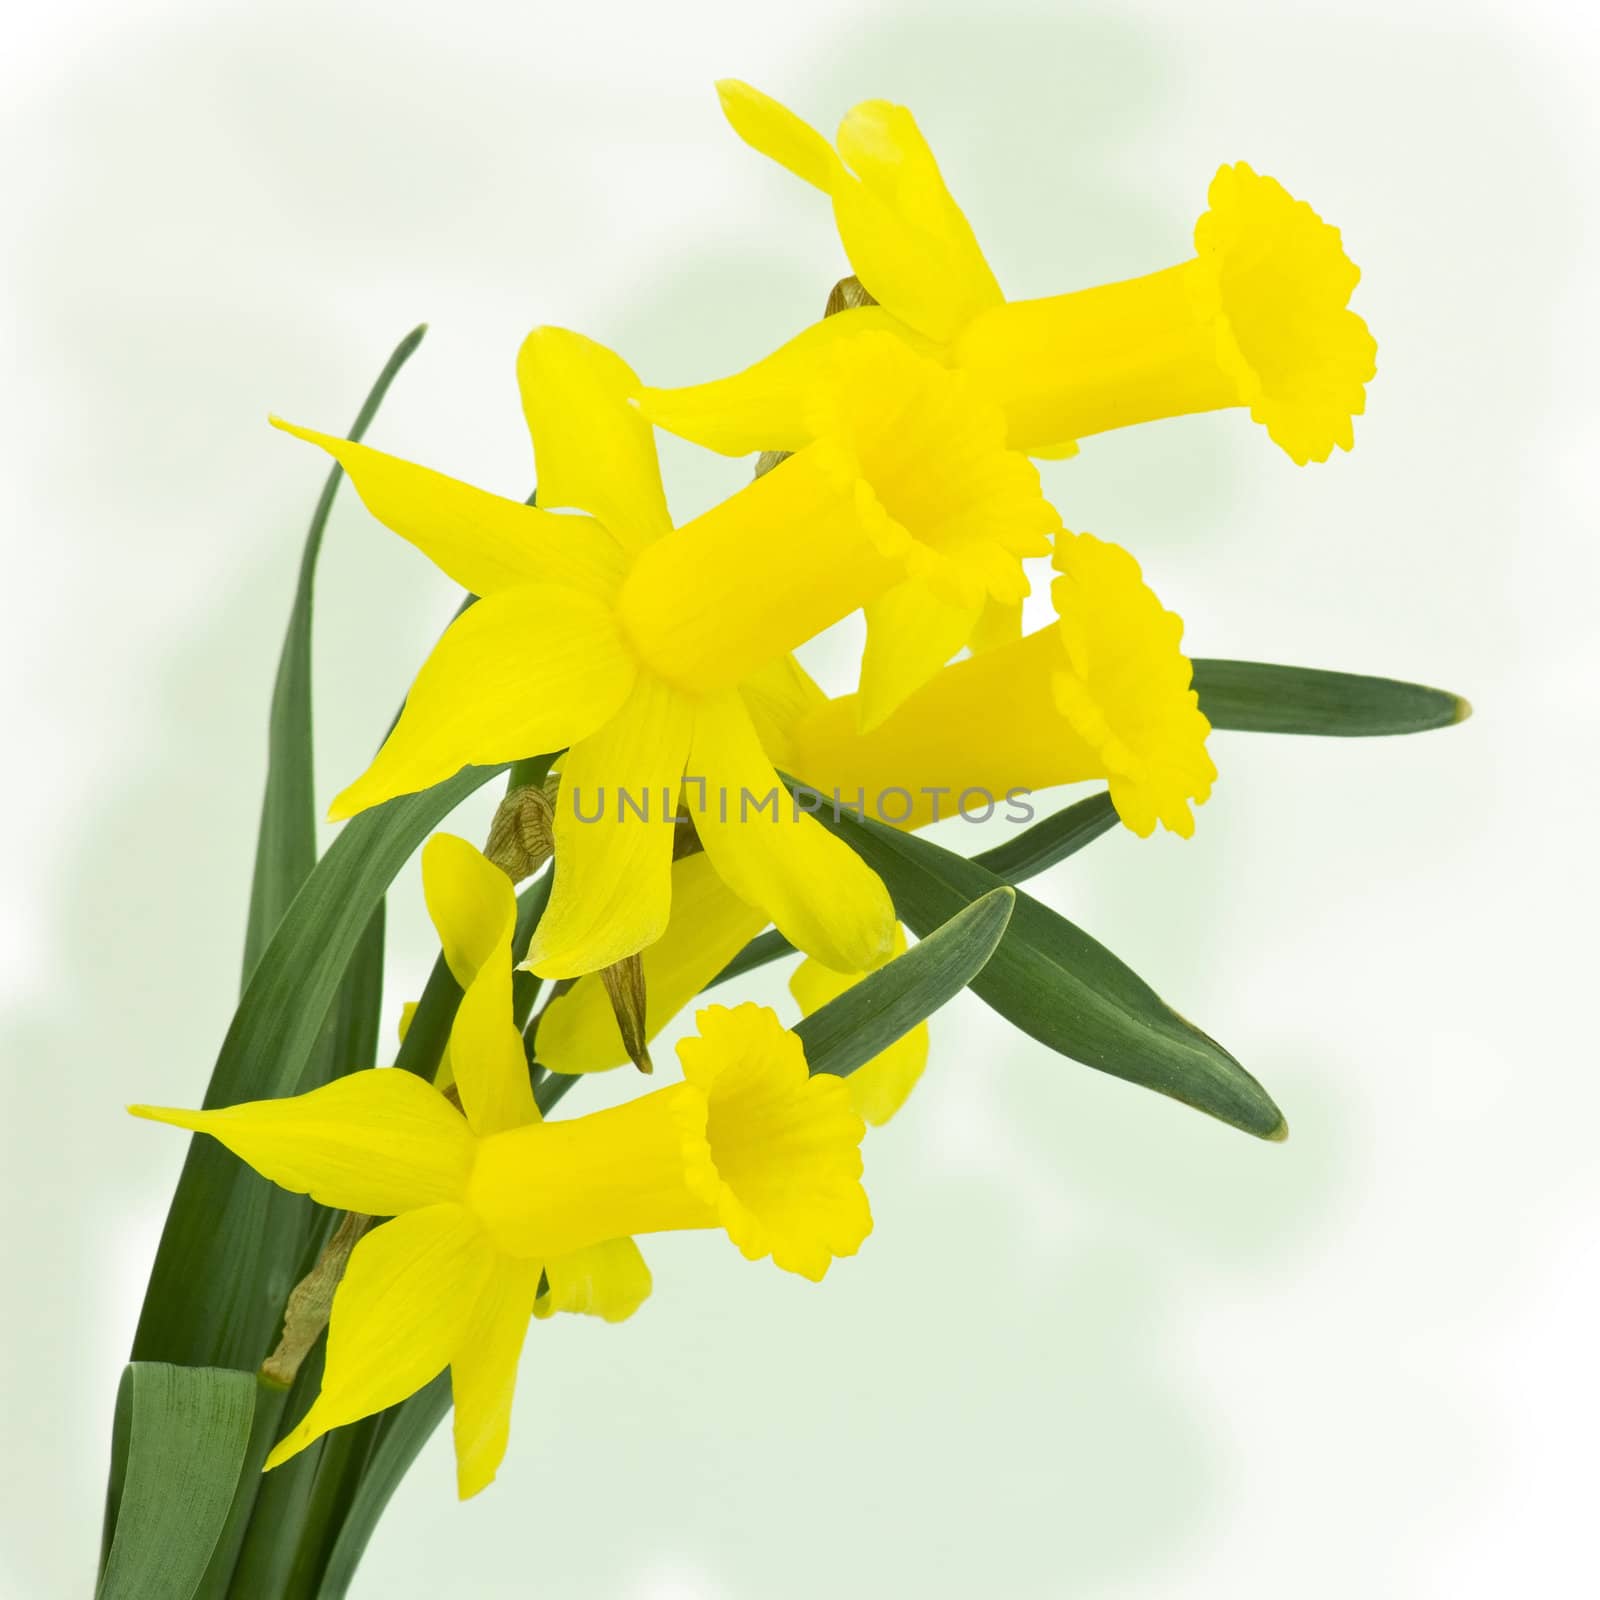 yellow narcissus flowers by miradrozdowski